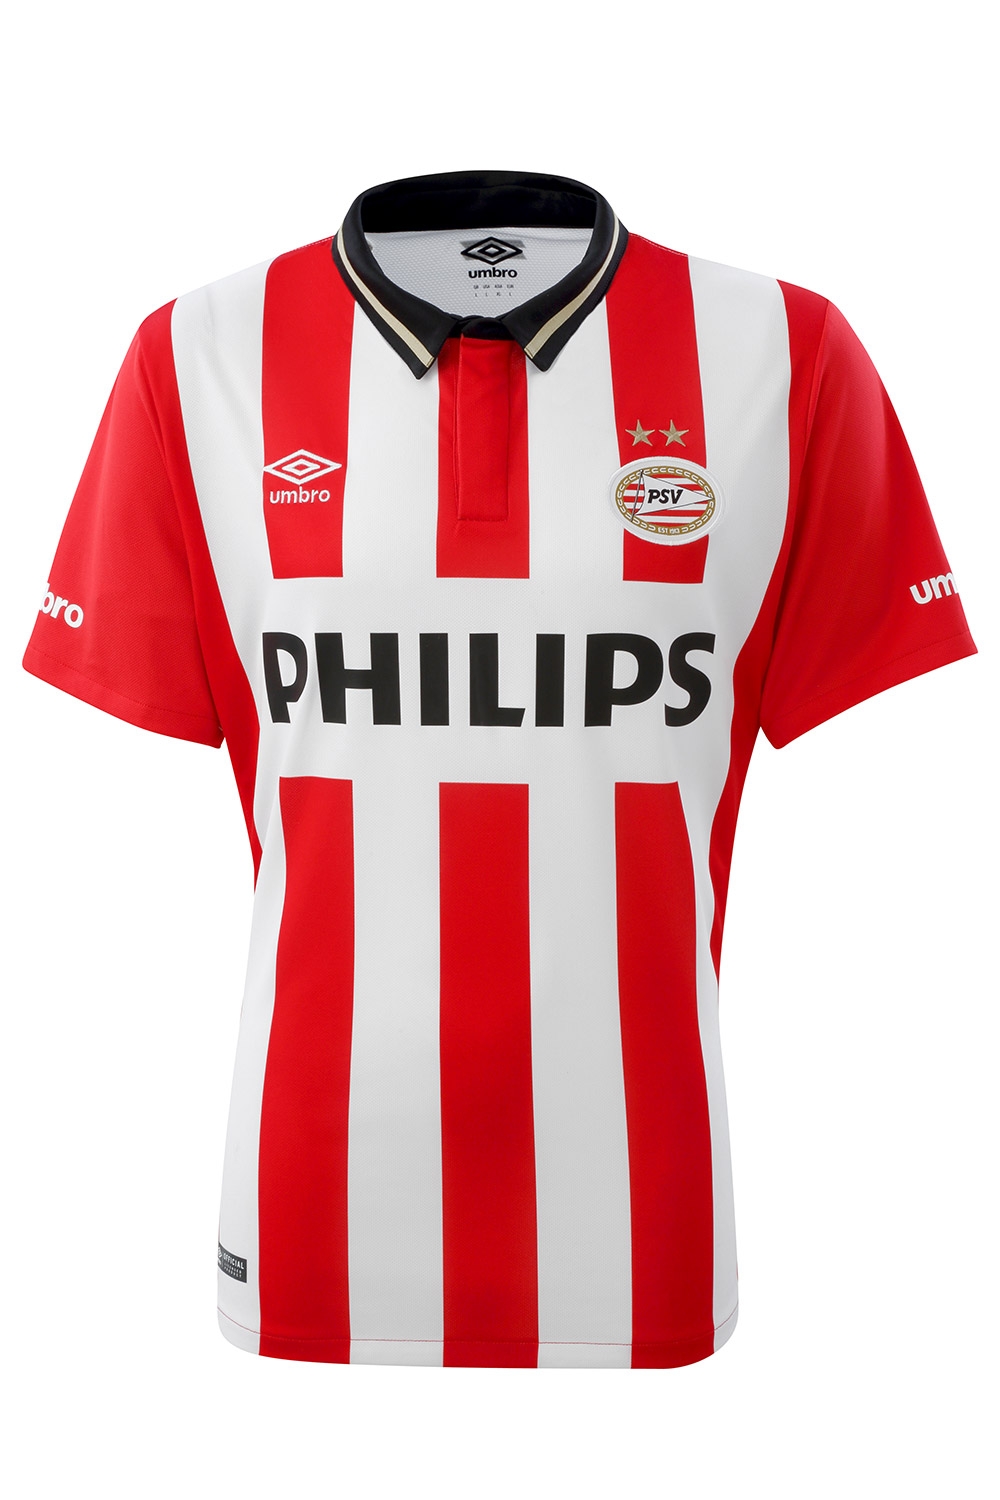 thuisshirt 2016 - PSV 15/16 kopen